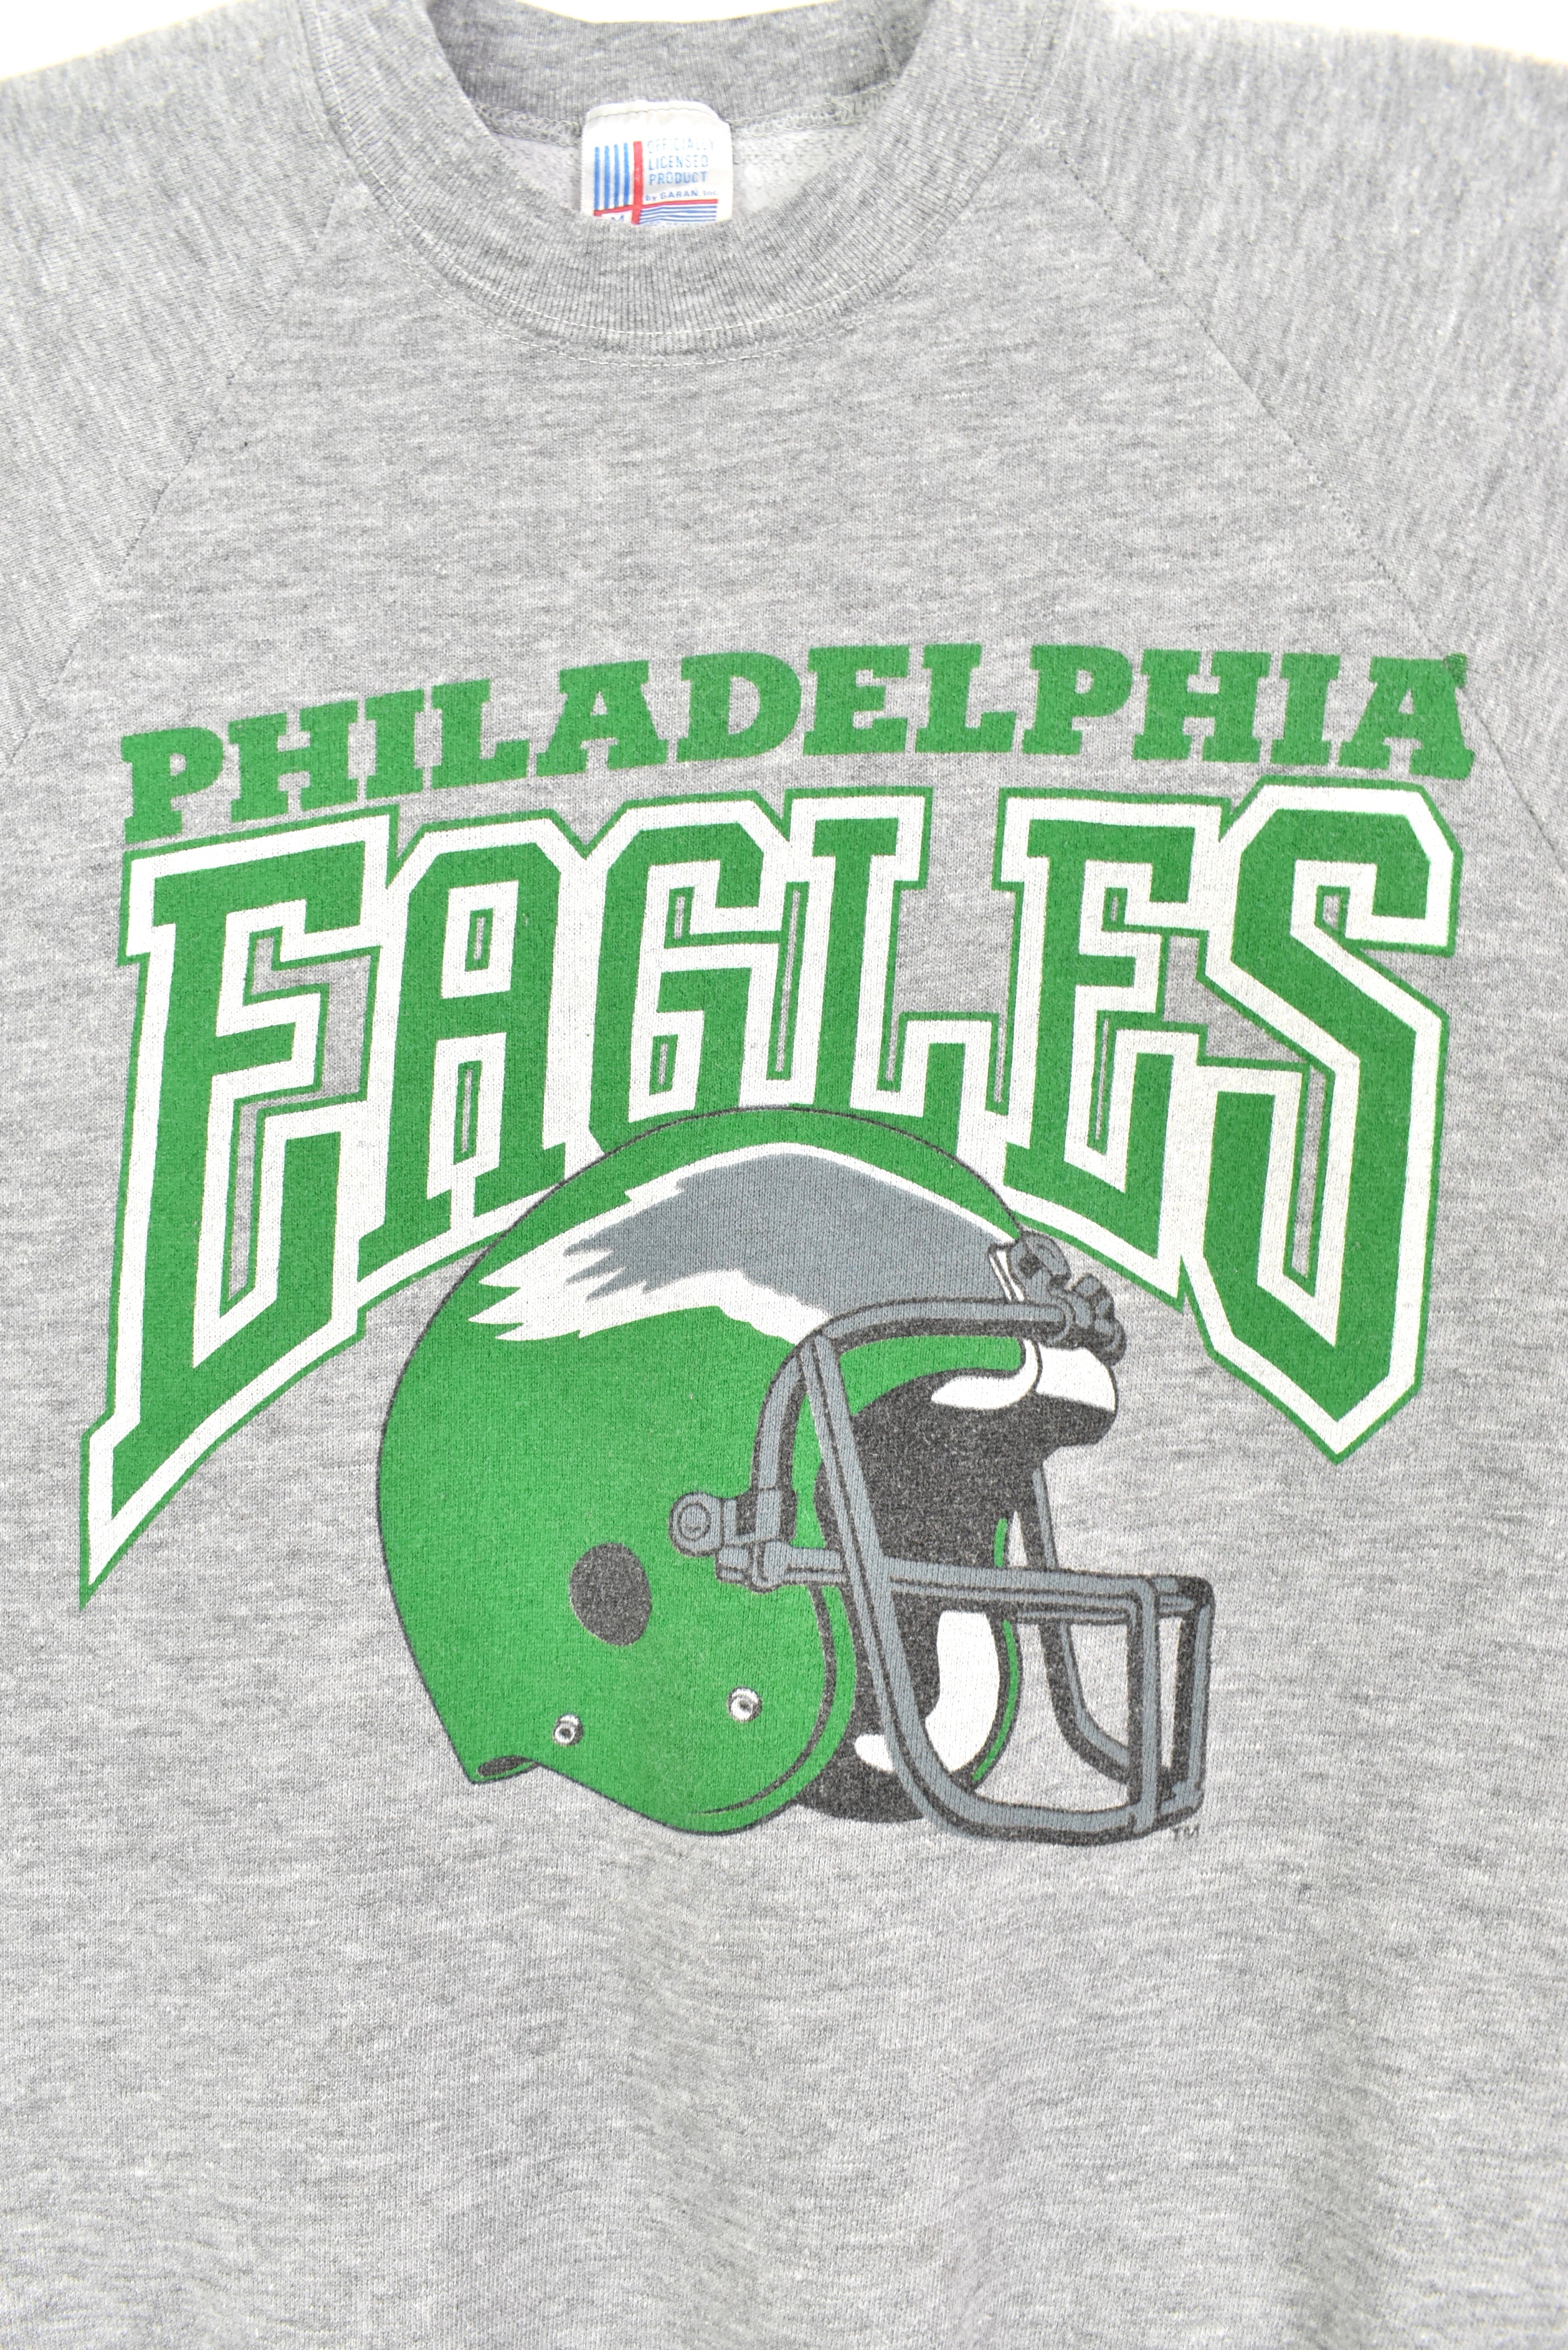 Vintage Philadelphia Eagles sweatshirt, 80s NFL graphic crewneck - XS, grey PRO SPORT